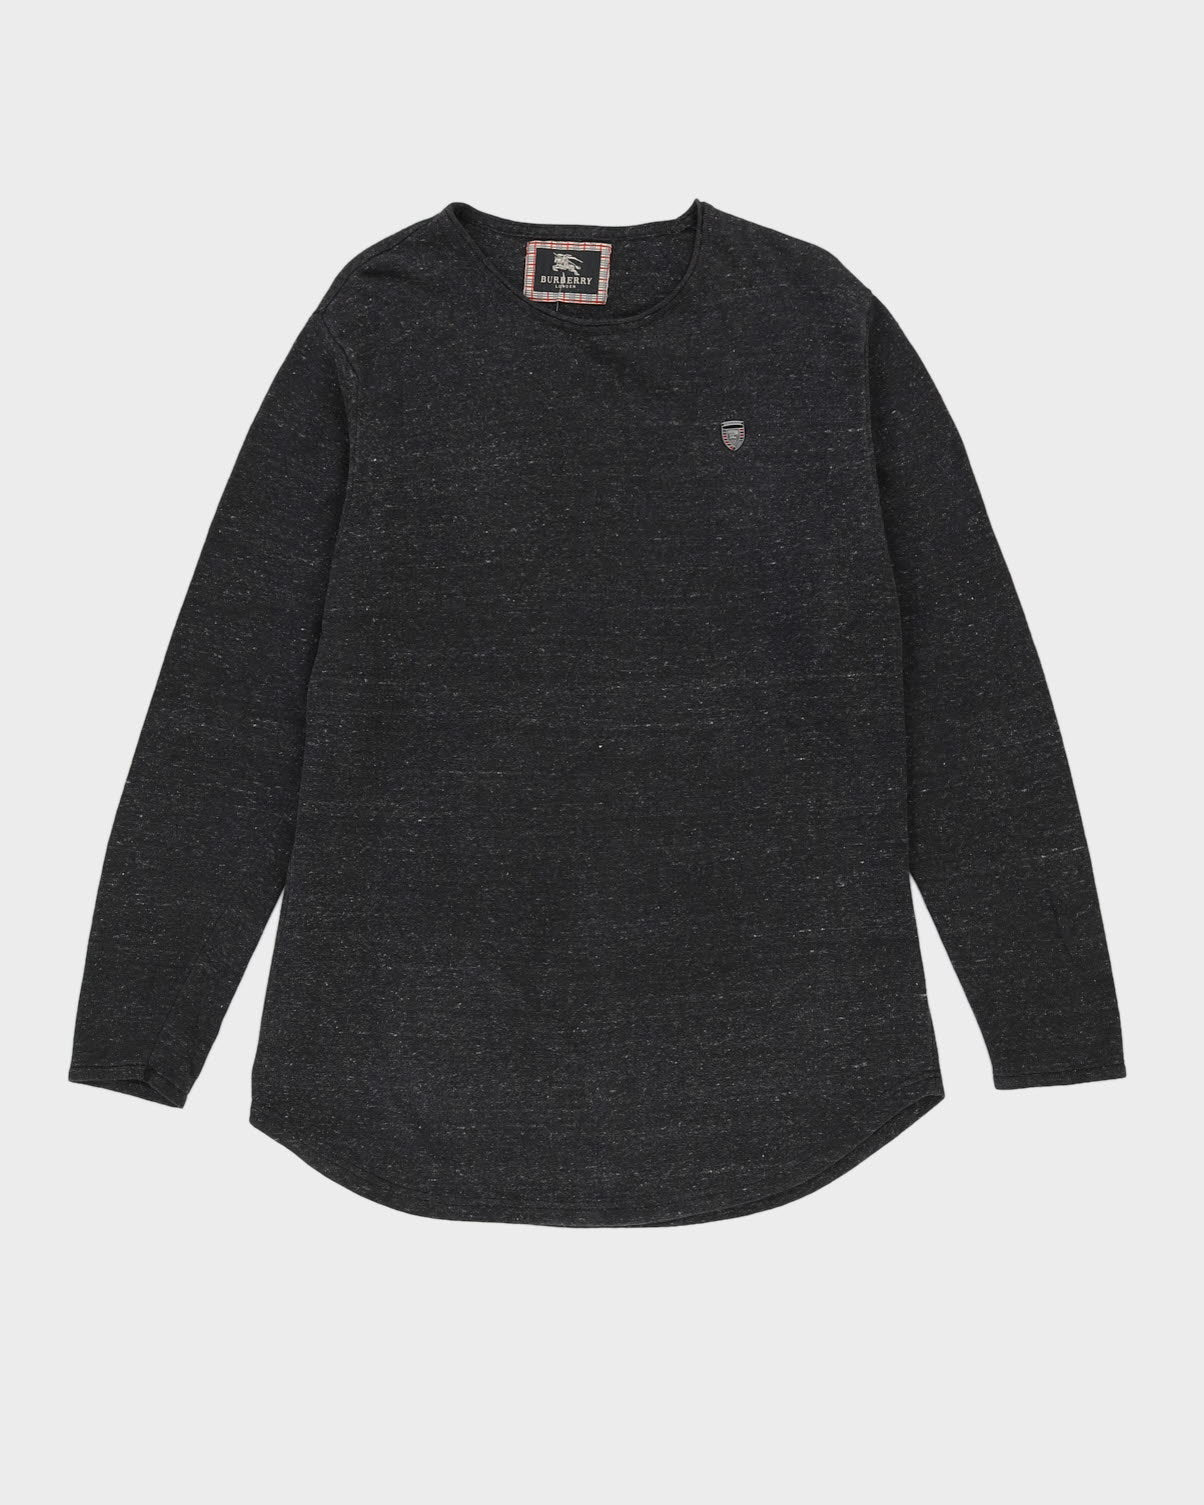 Burberry London Grey Knitted Sweatshirt - S